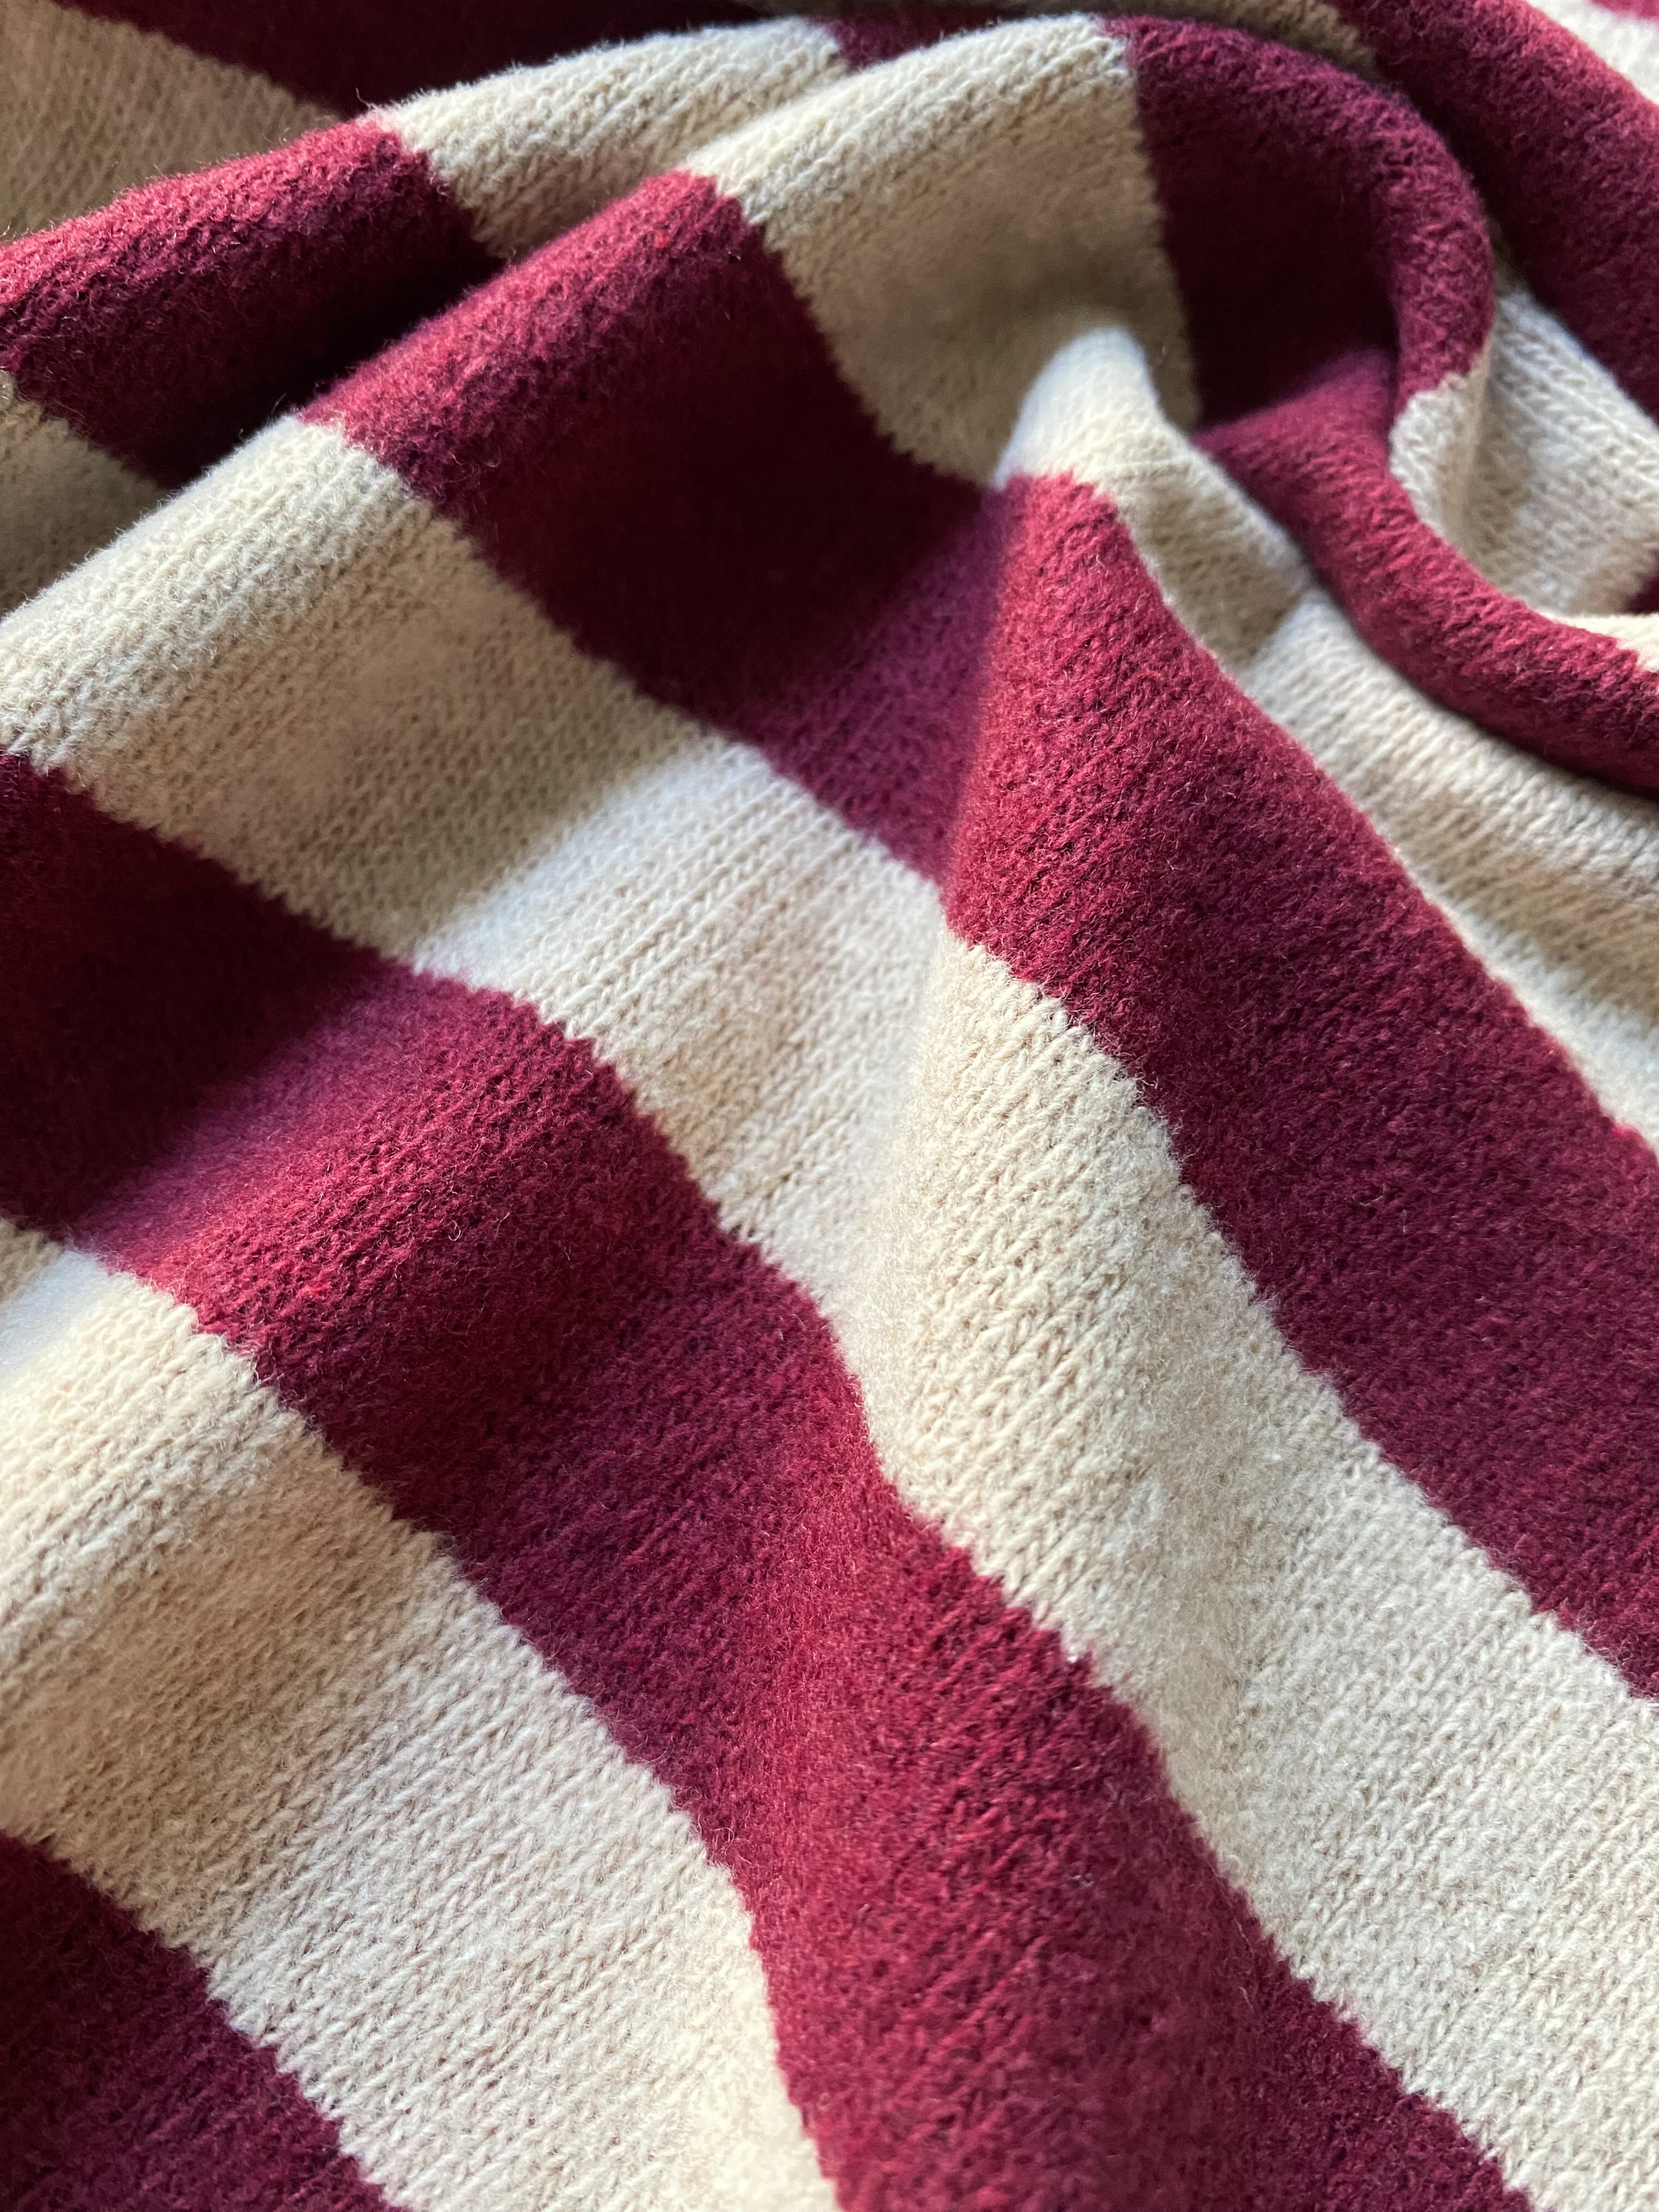 No. 1035 Soft knit beige wine red stripes